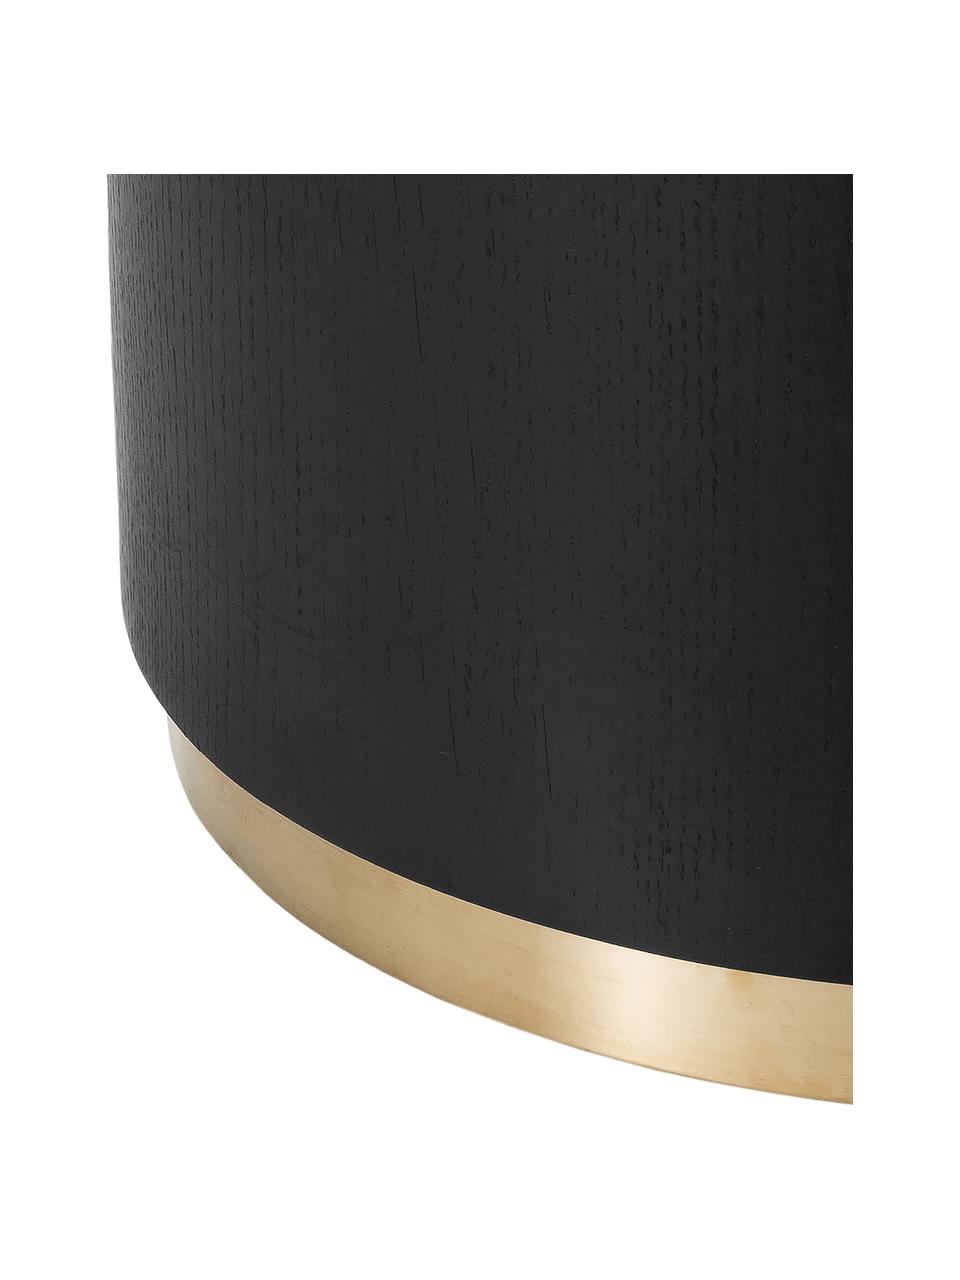 Mesa auxiliar redonda Clarice, Estructura: tablero de fibras de dens, Negro, dorado, Ø 40 x Al 50 cm